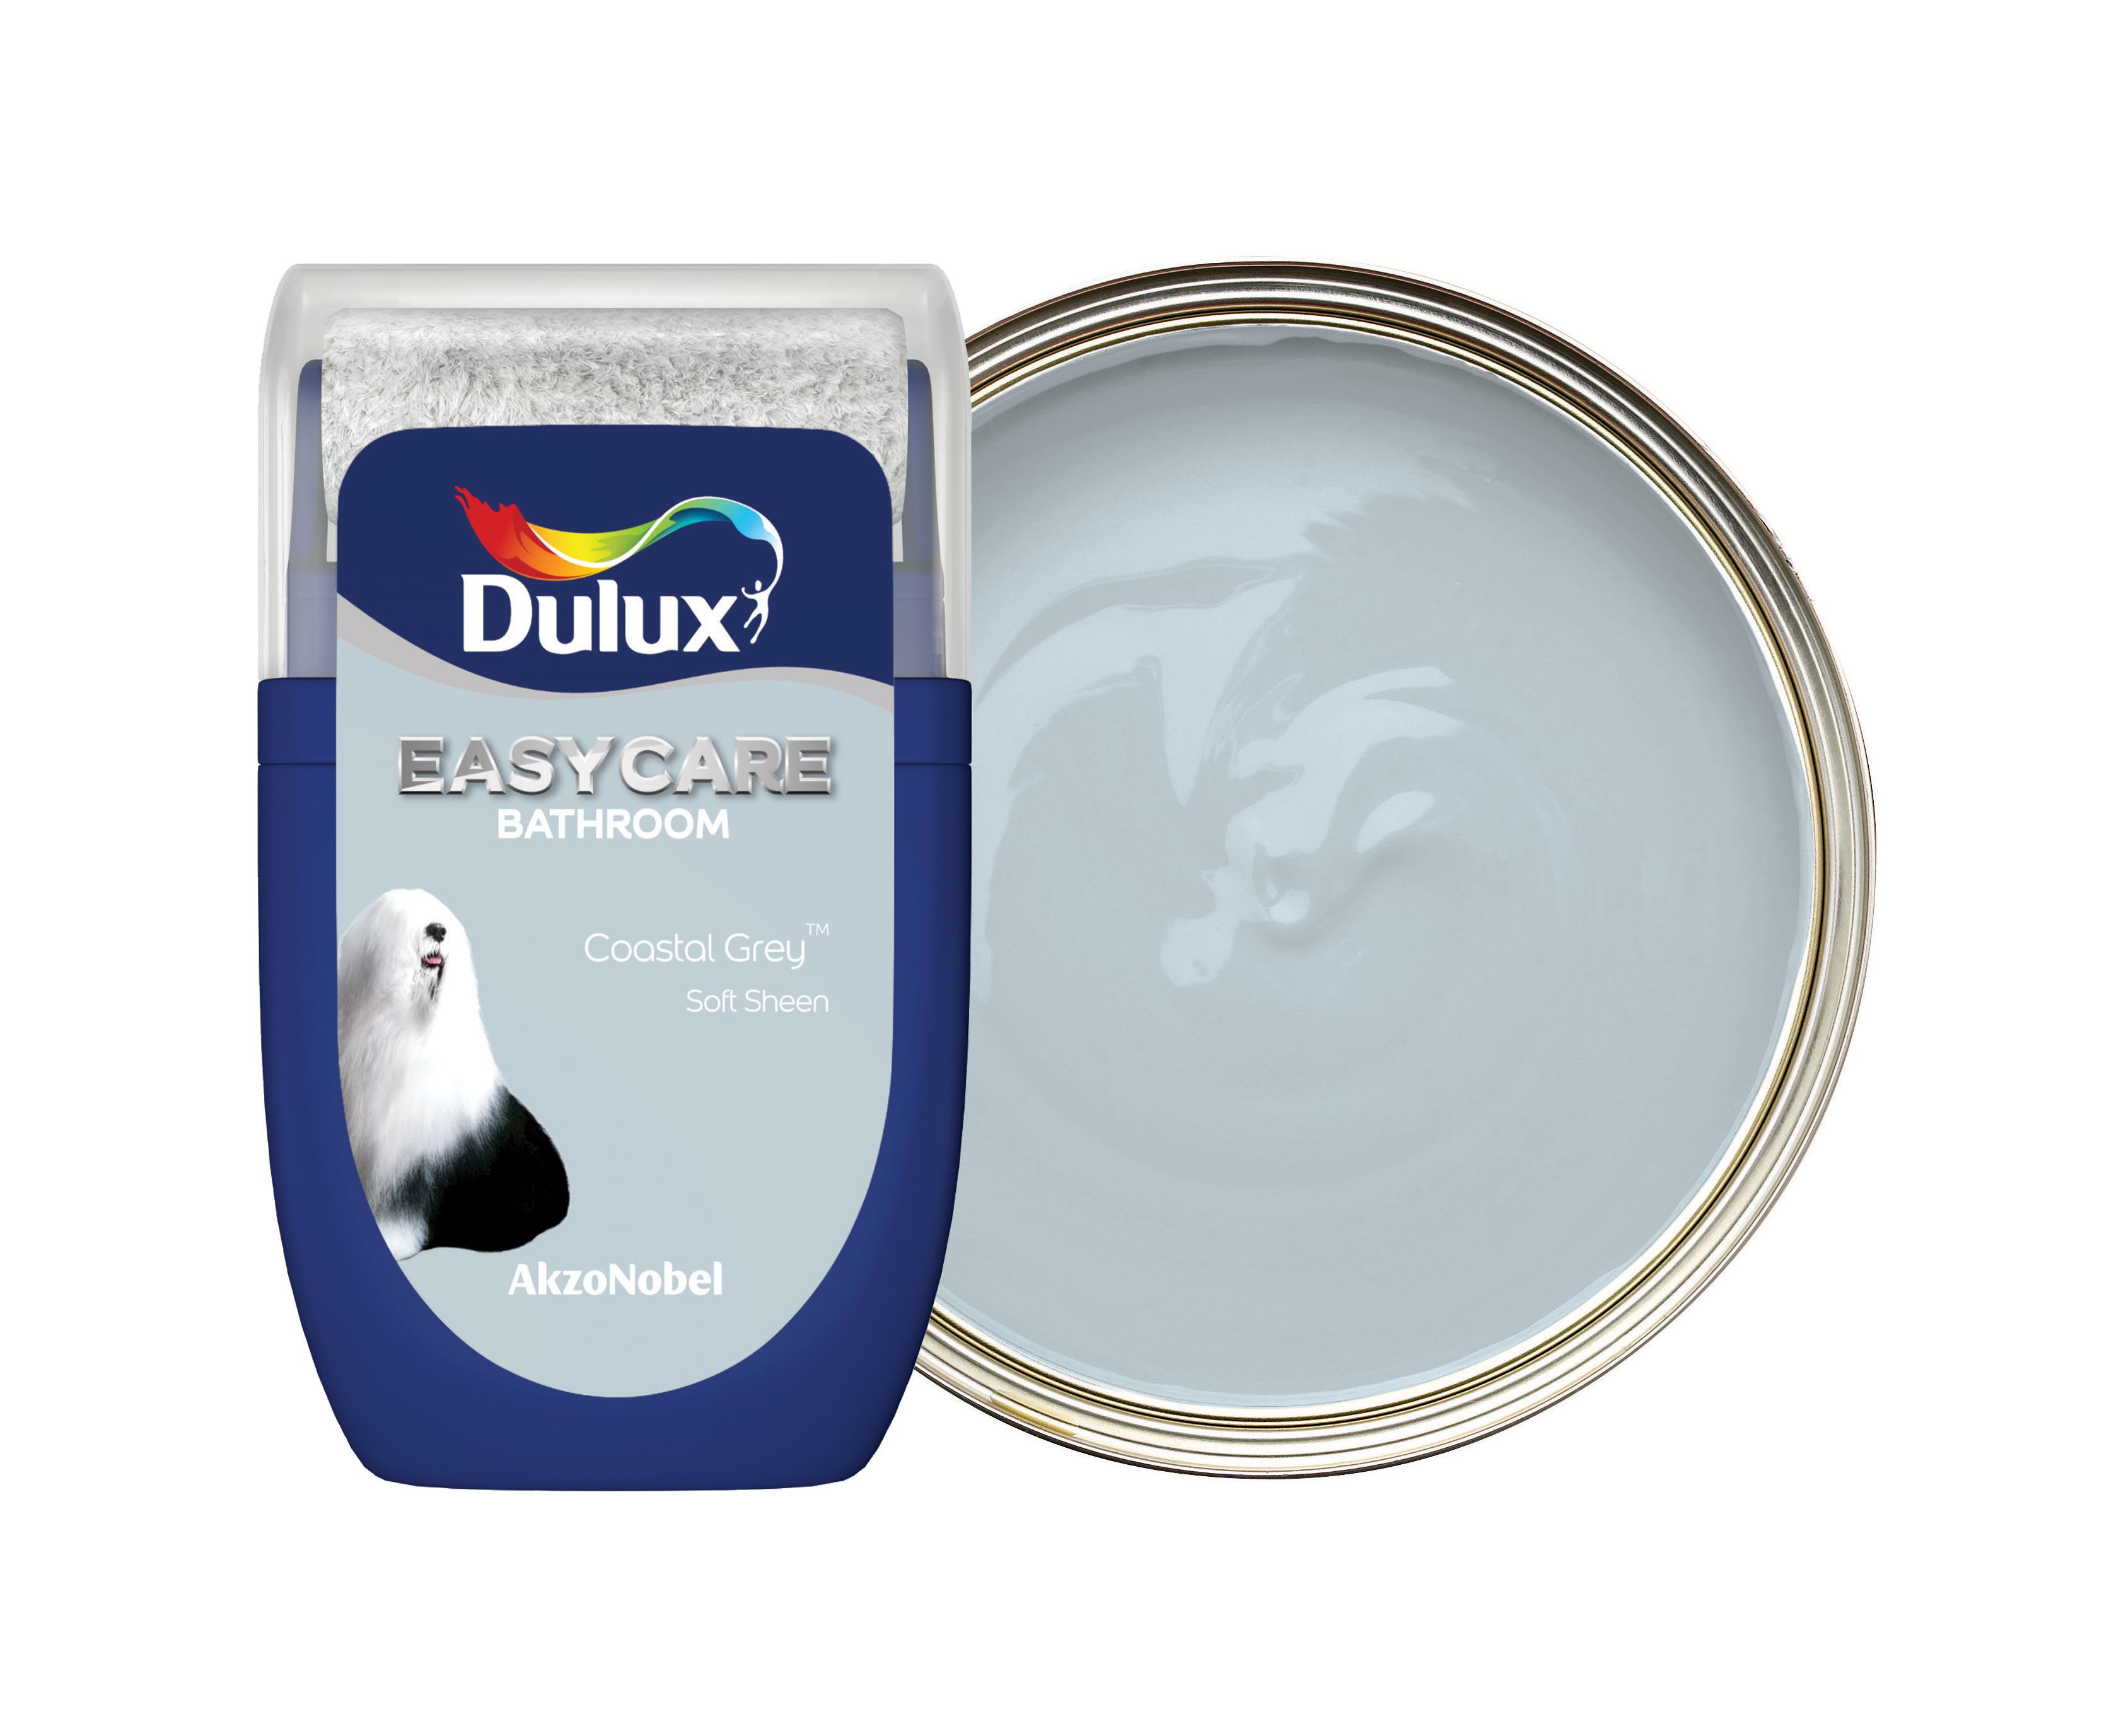 Dulux Easycare Bathroom Paint - Coastal Grey Tester